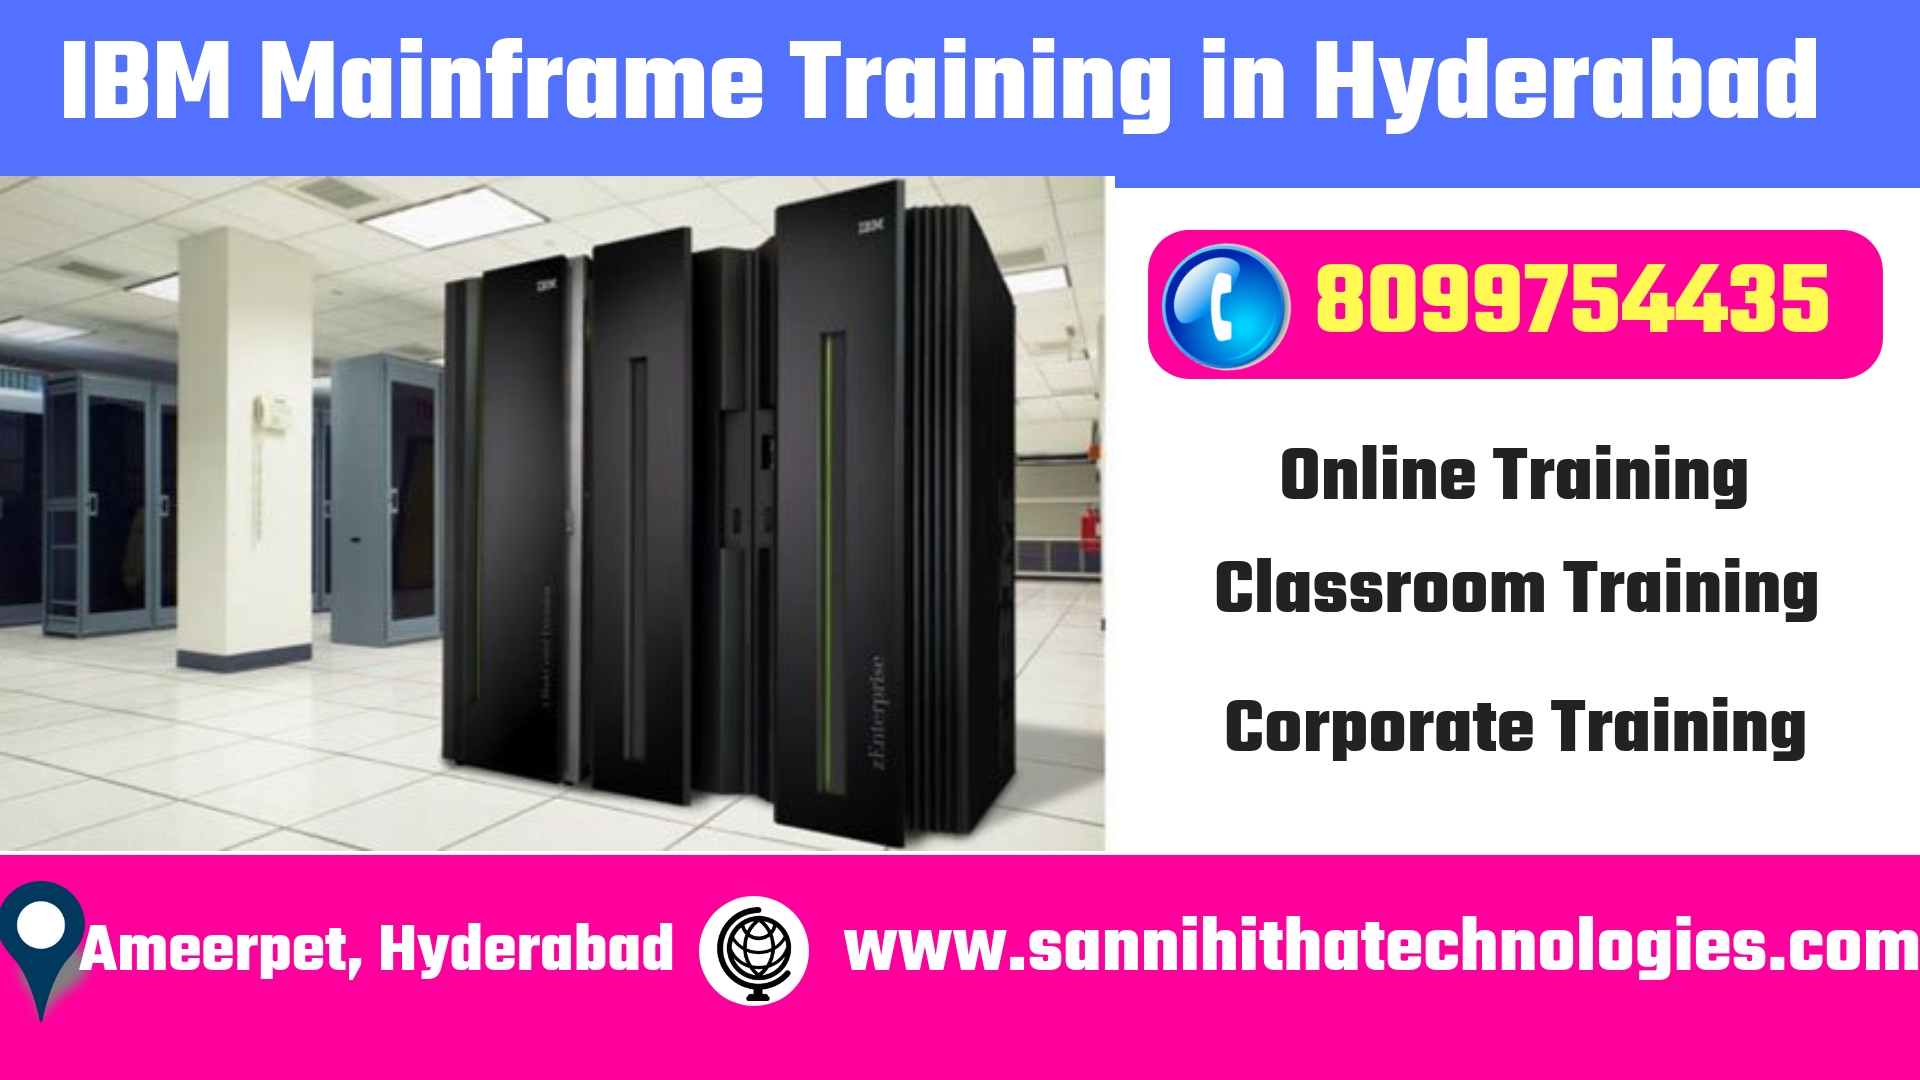 IBM Mainframe Training in Hyderabad, Hyderabad, Andhra Pradesh, India